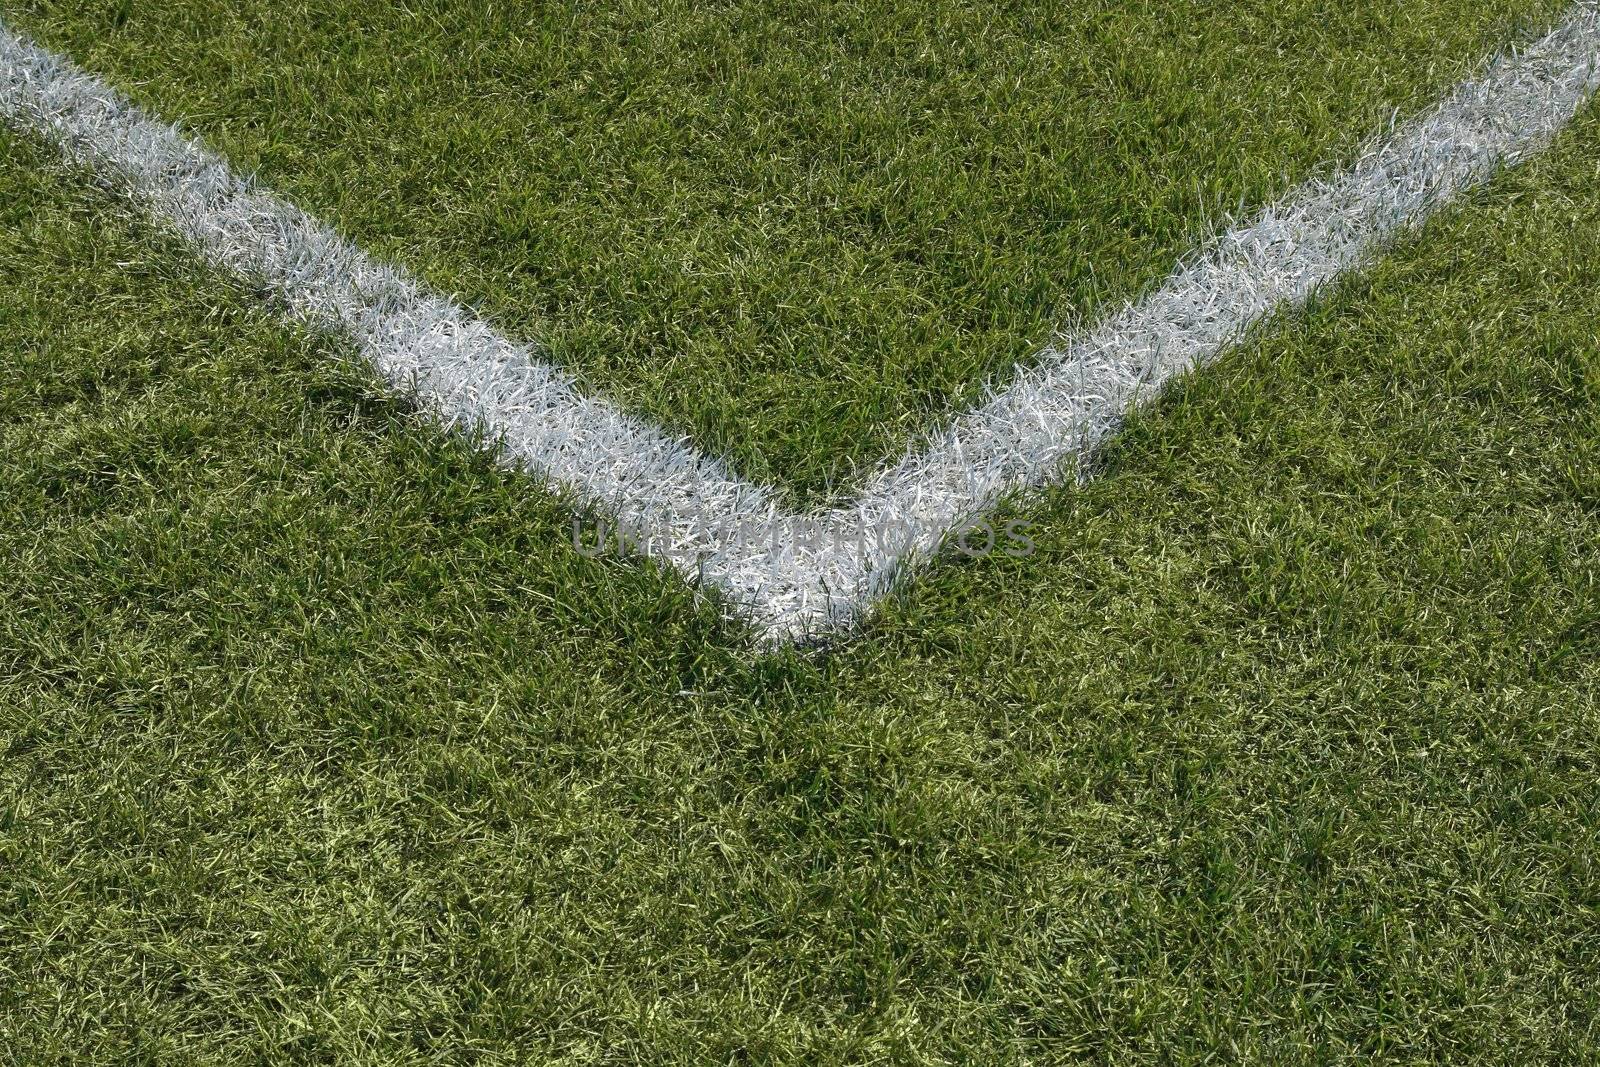 Corner boundary lines of a green grass sports field.